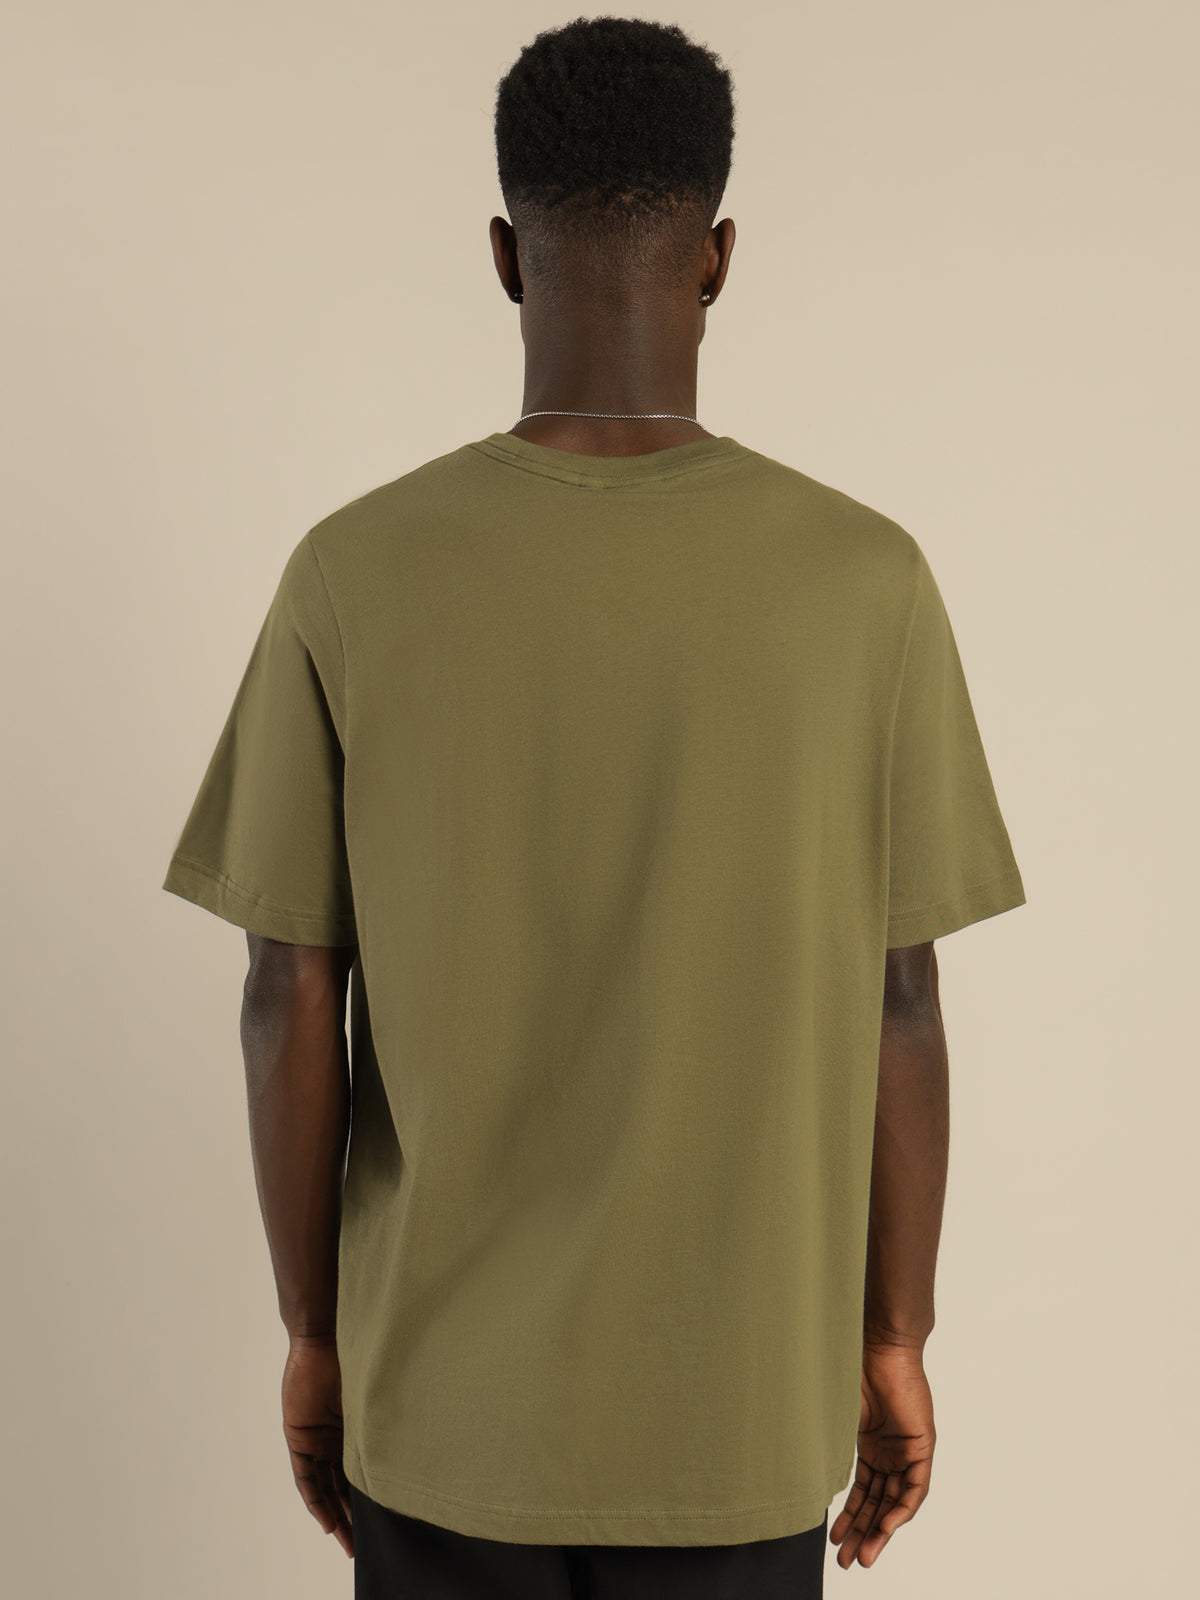 Loungewear Adicolor Essentials Trefoil T-Shirt in Focus Olive Green